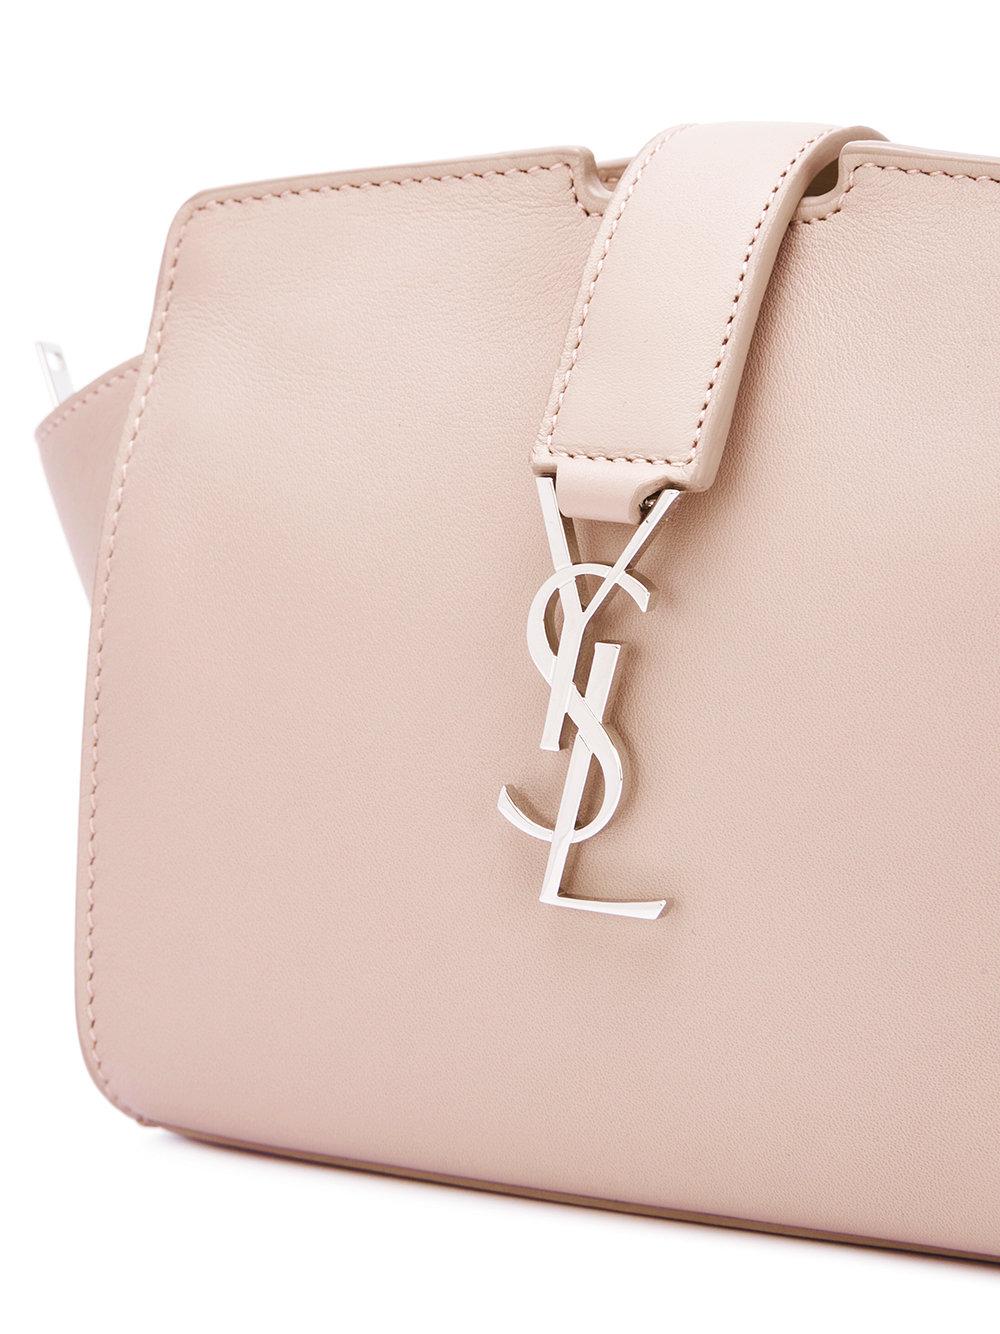 Lyst - Saint Laurent Toy Ysl Cabas Crossbody Bag in Pink